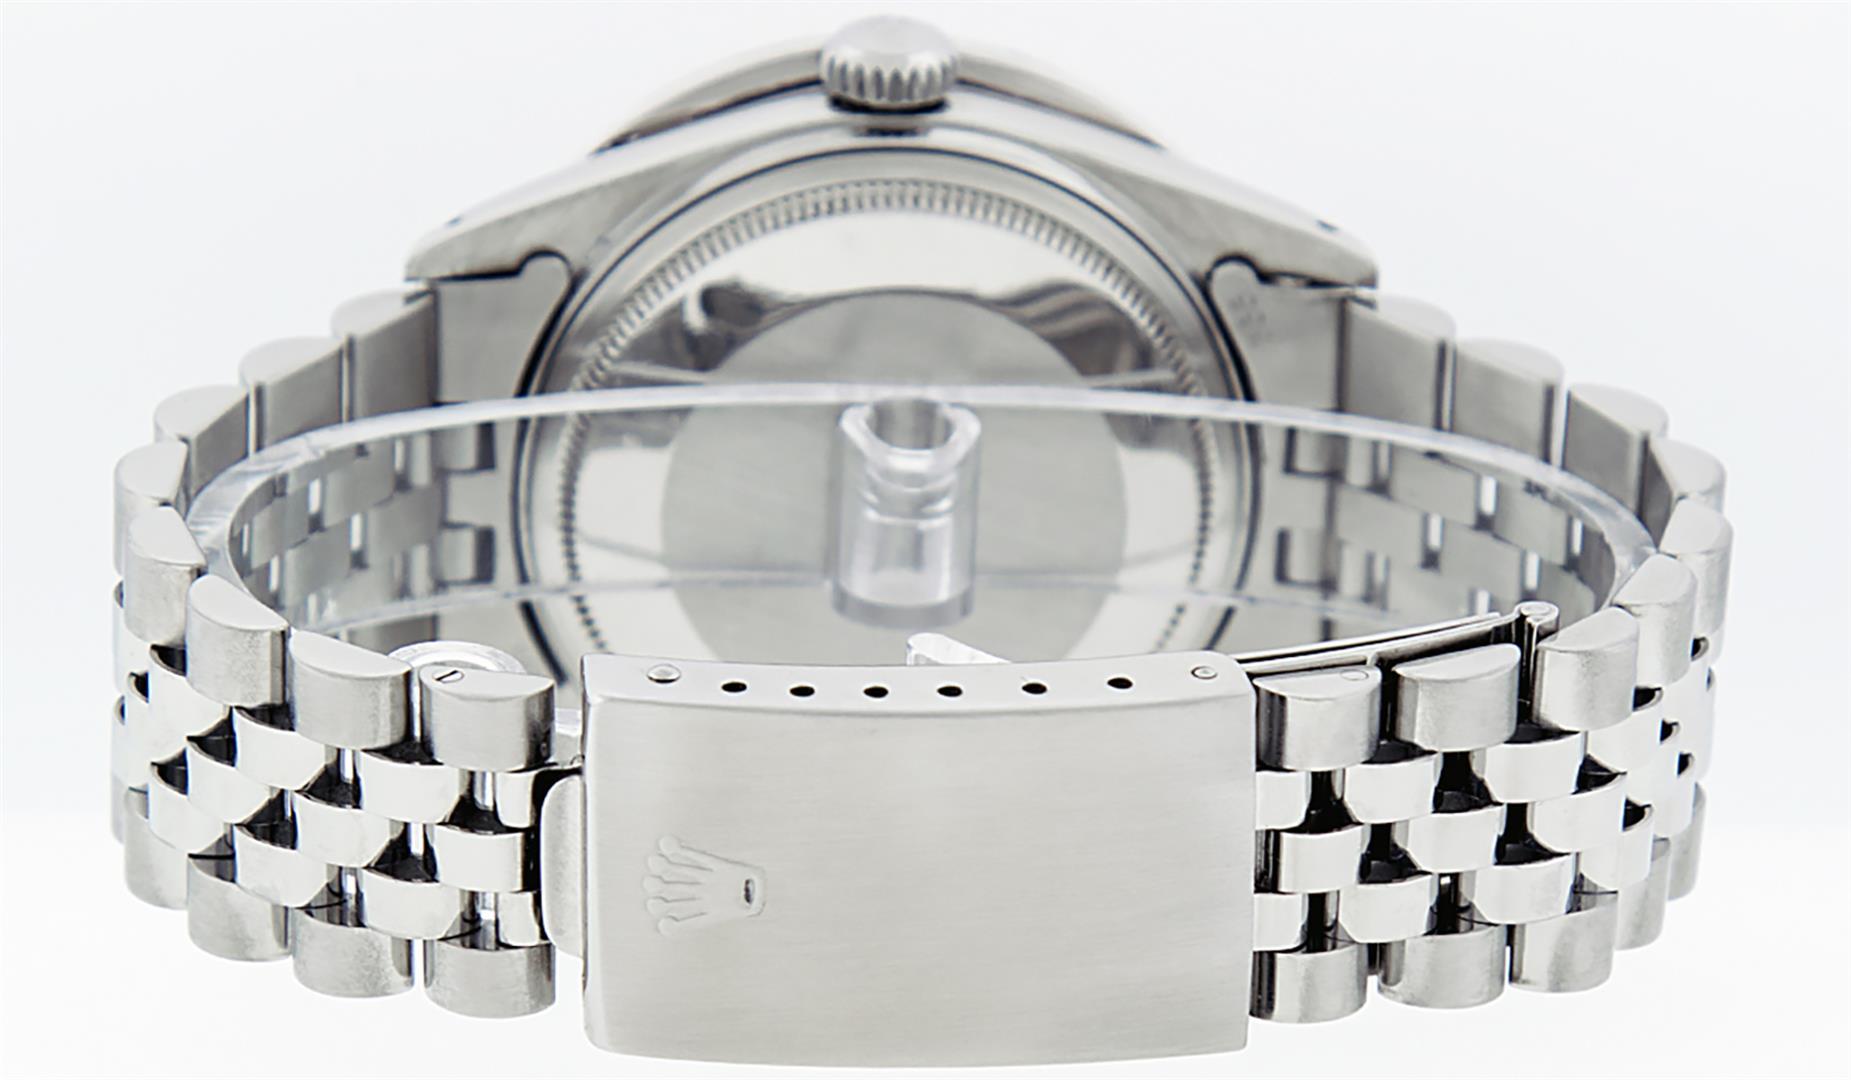 Rolex Mens Stainless Steel Meteorite 3 ctw Diamond Datejust 36MM Wristwatch